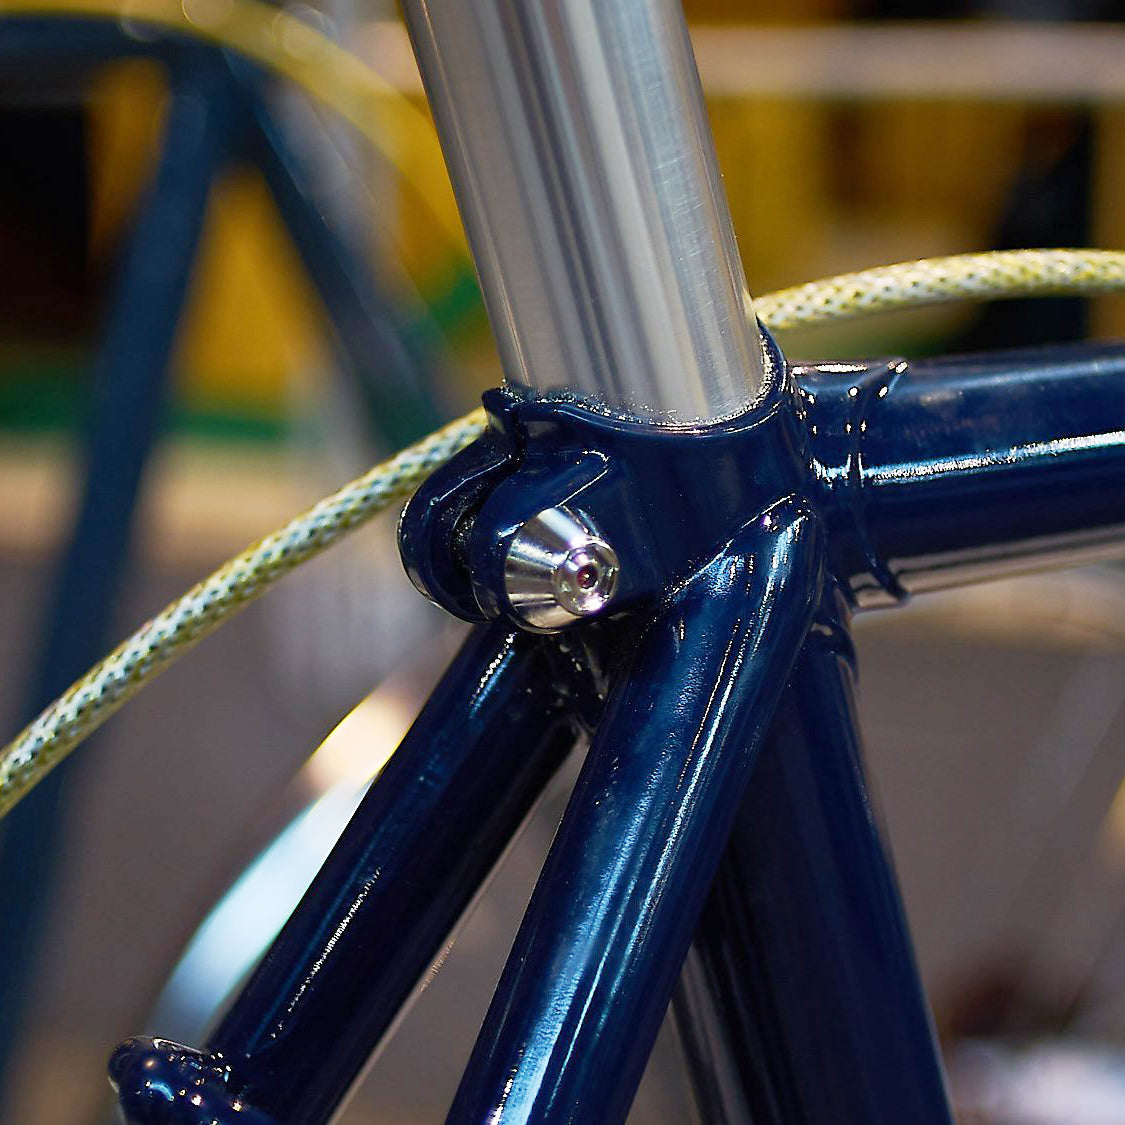 Seatylock la selle de vélo devenant antivol - Blog Esprit Design